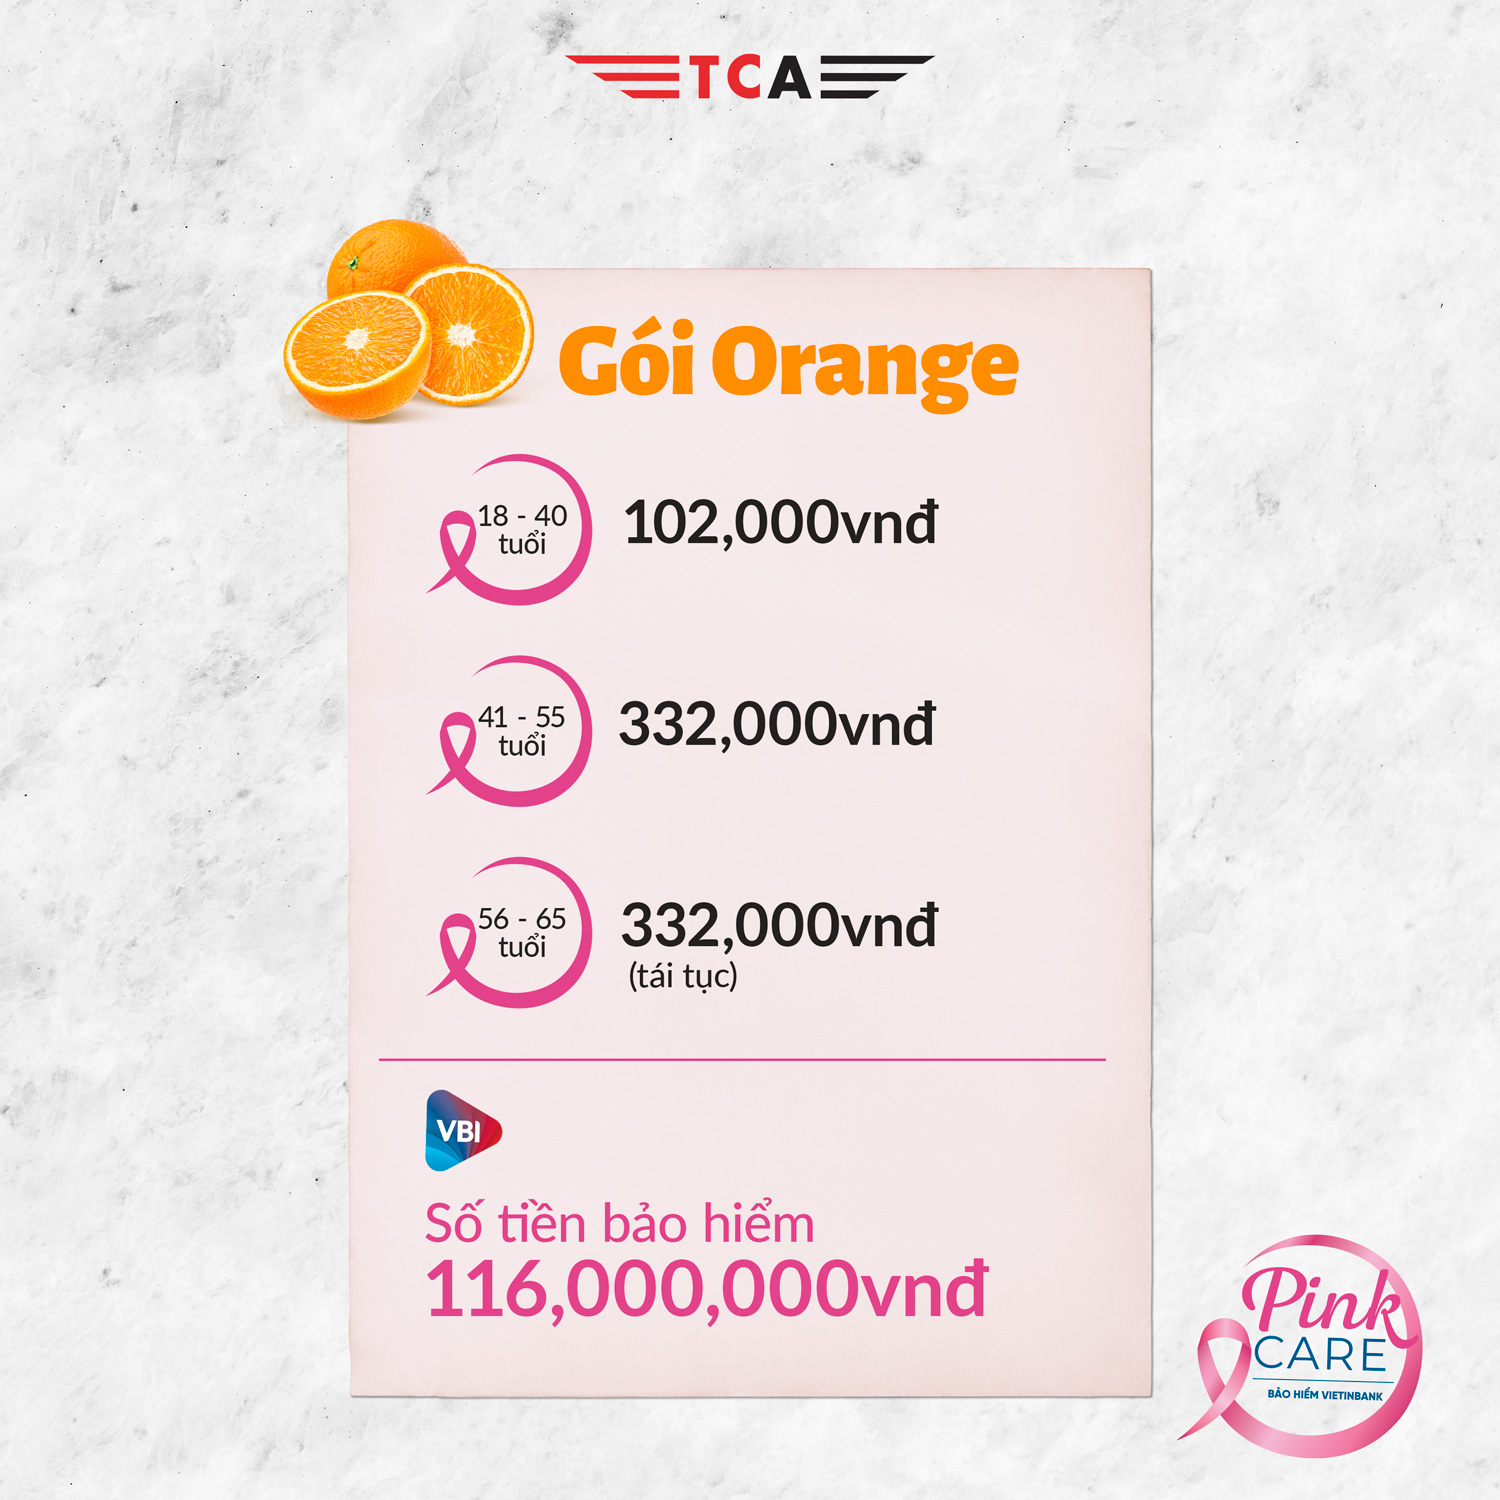 VBI Pink care orange 900x900 1